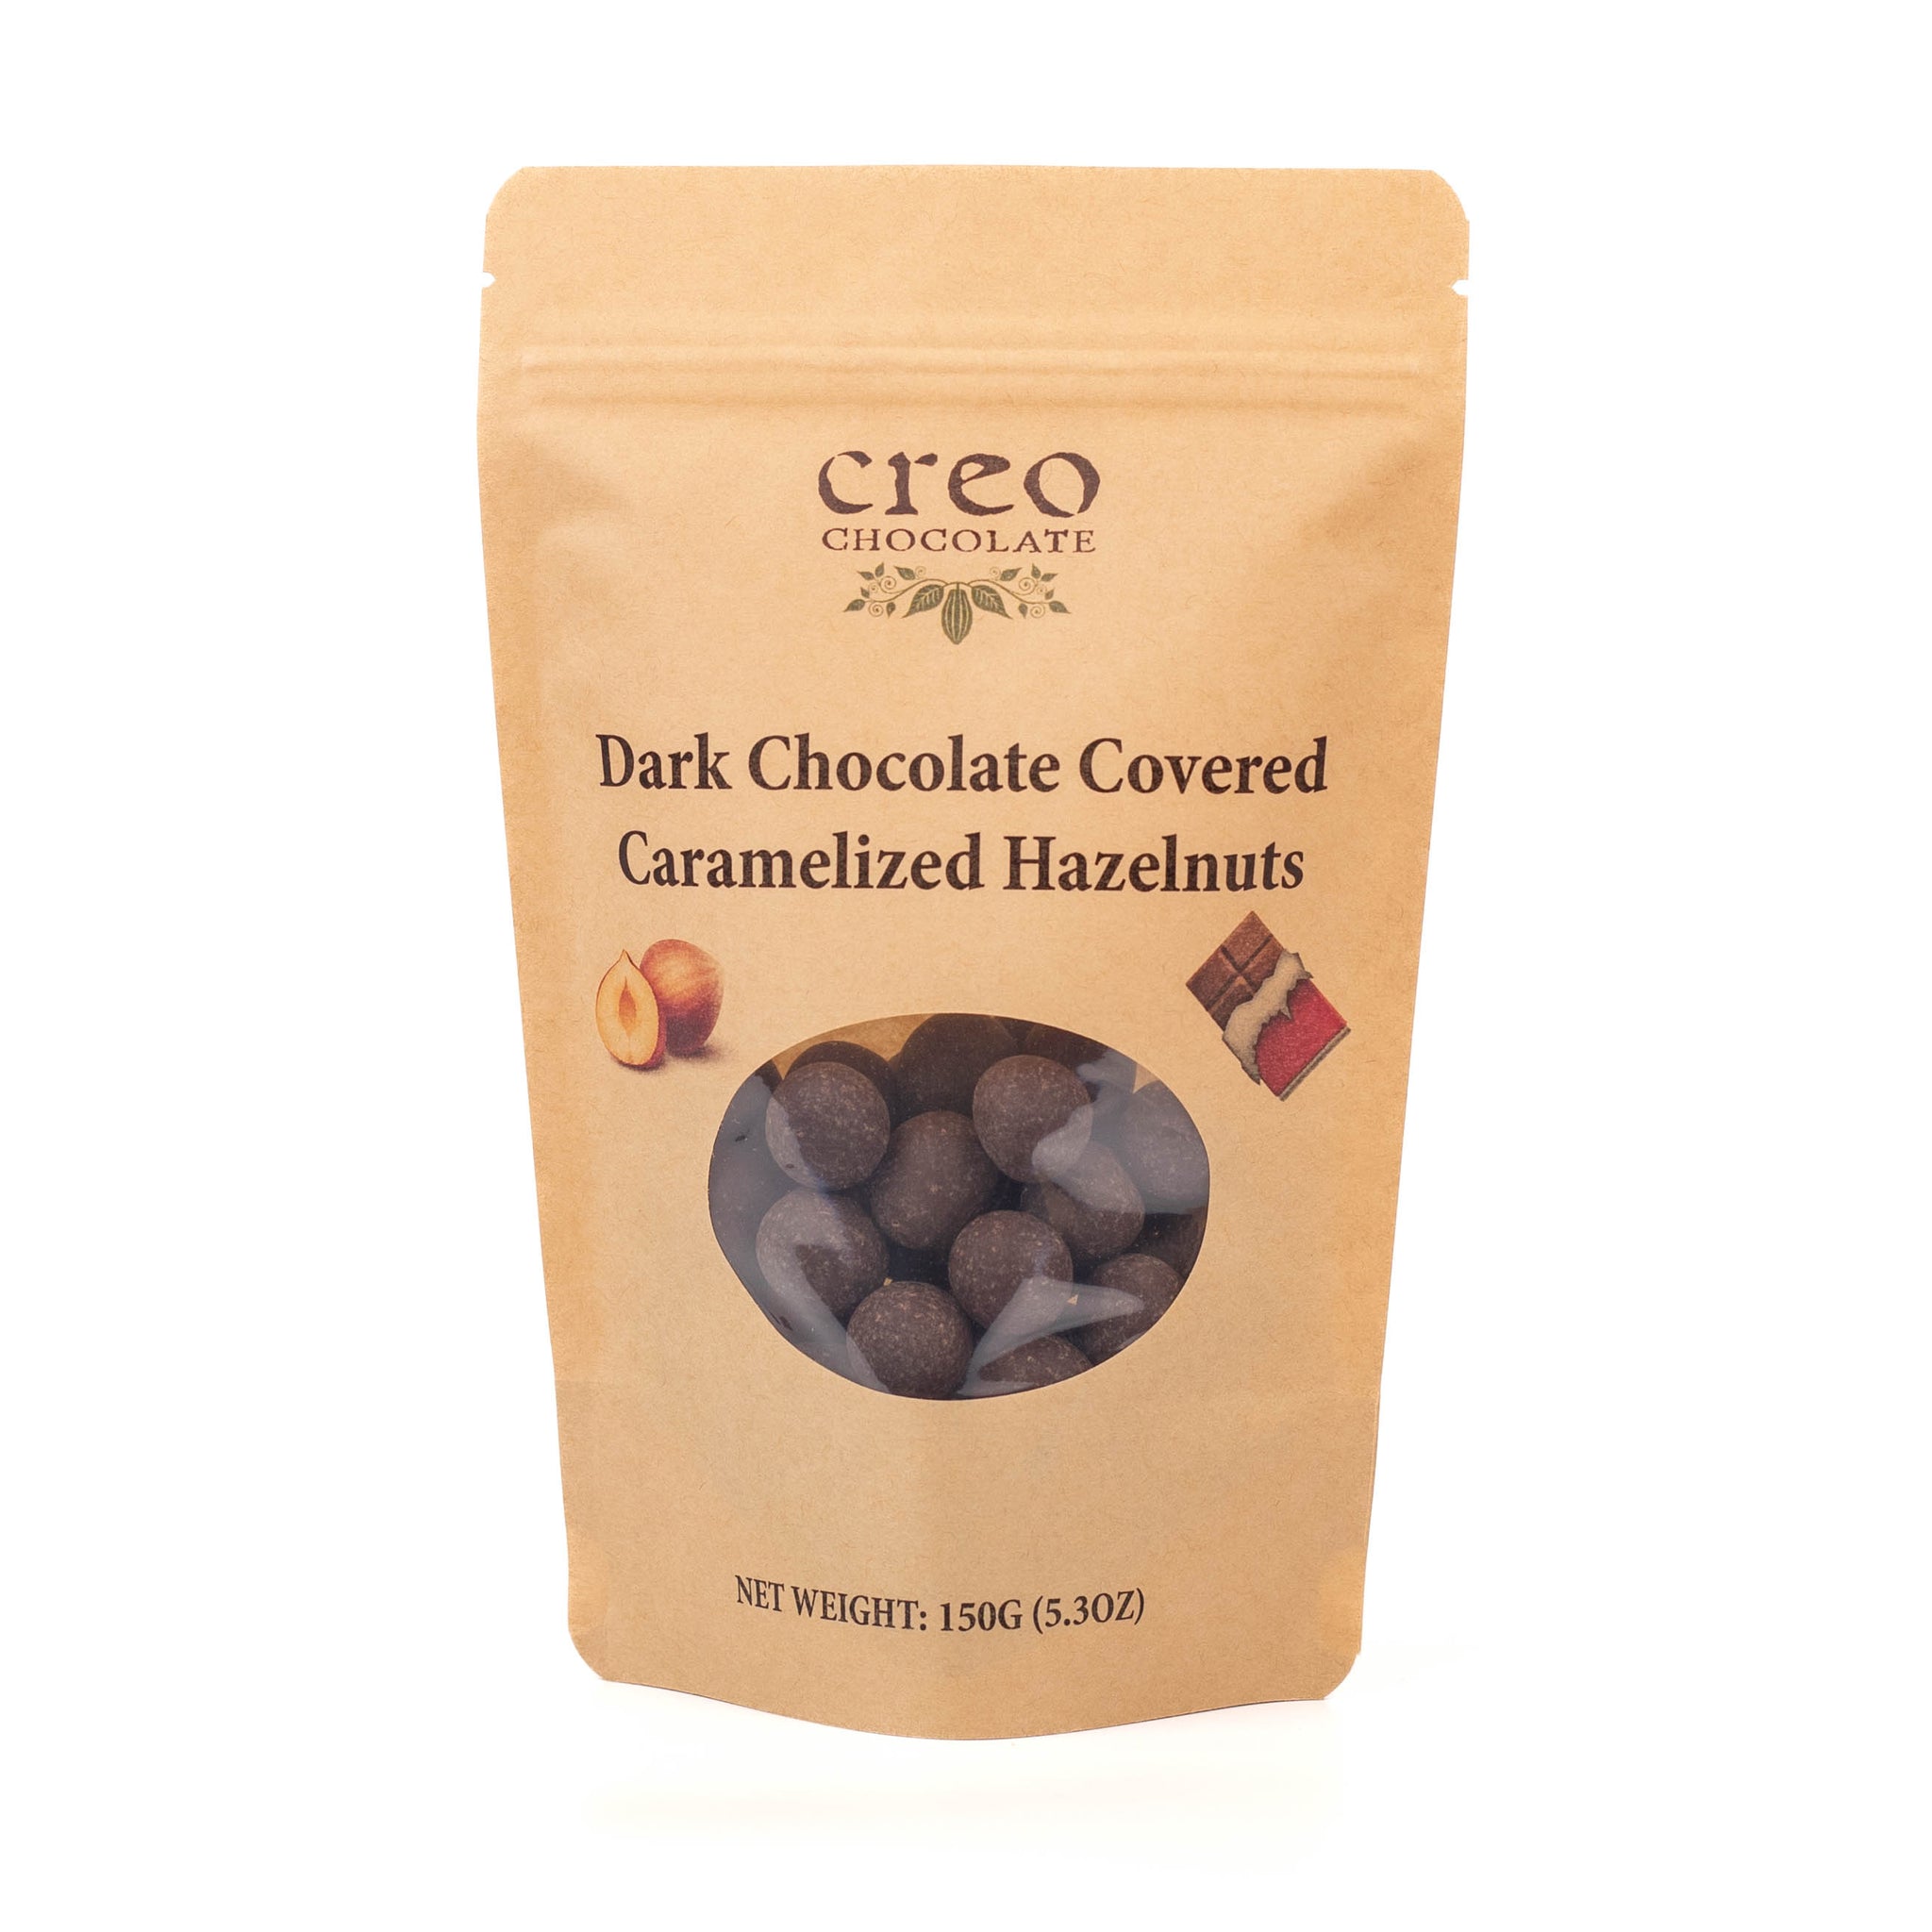 Dark Chocolate Covered Caramelized Hazelnuts